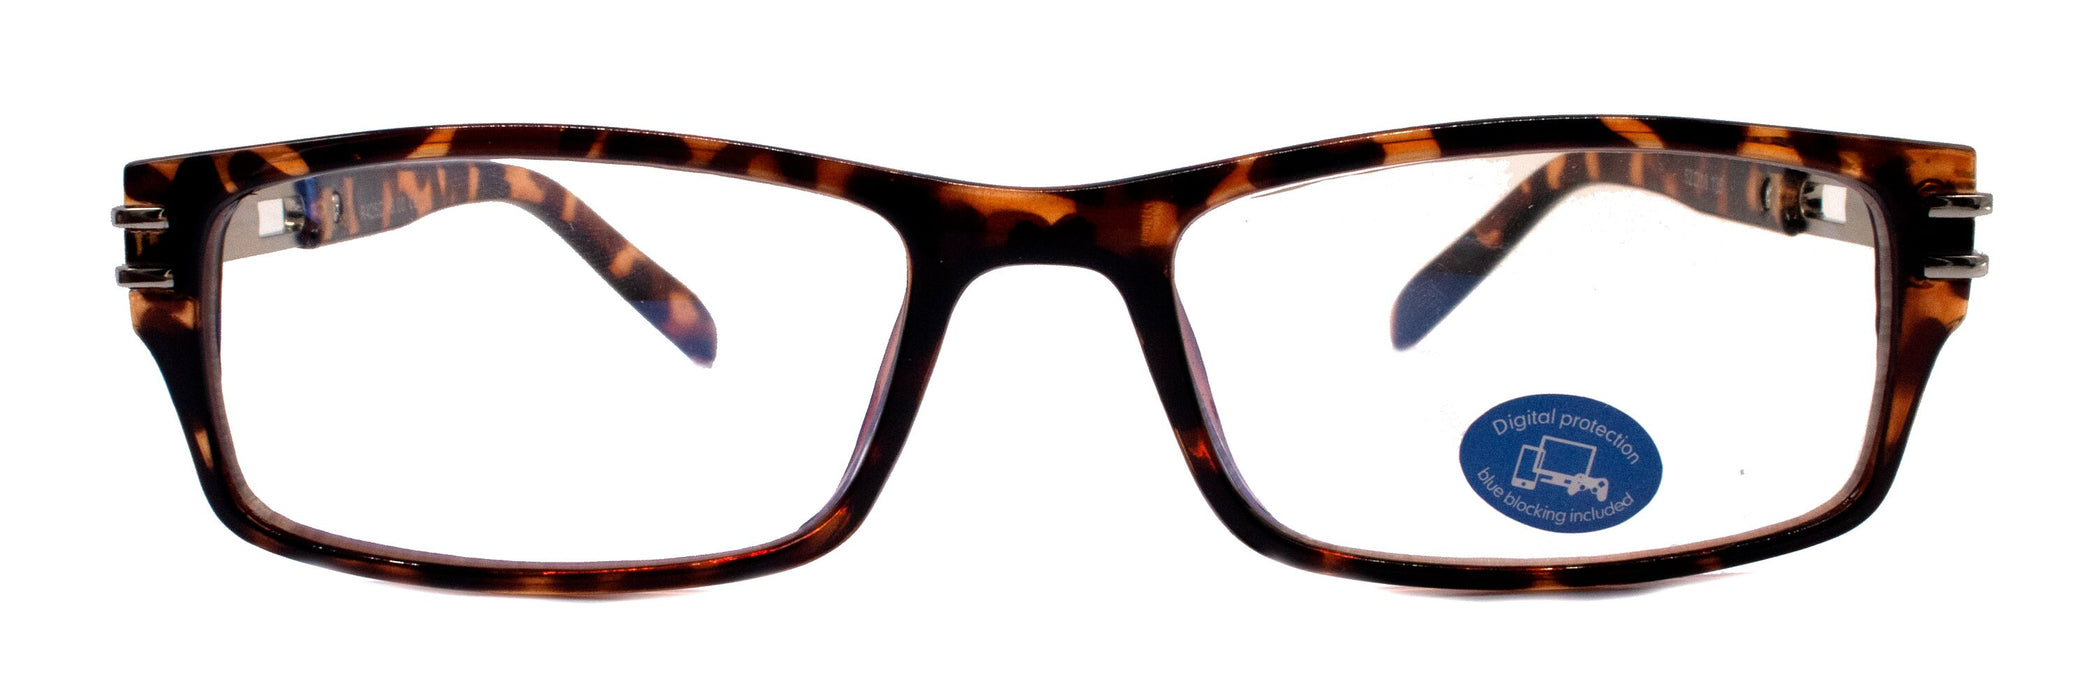 The Hudson, (Blue Light Glasses) Reading Glasses, No Magnification w/ A/R AntiGlare, Reduce Eyestrain (Brown Tortoise Shell) NY Fifth Avenue